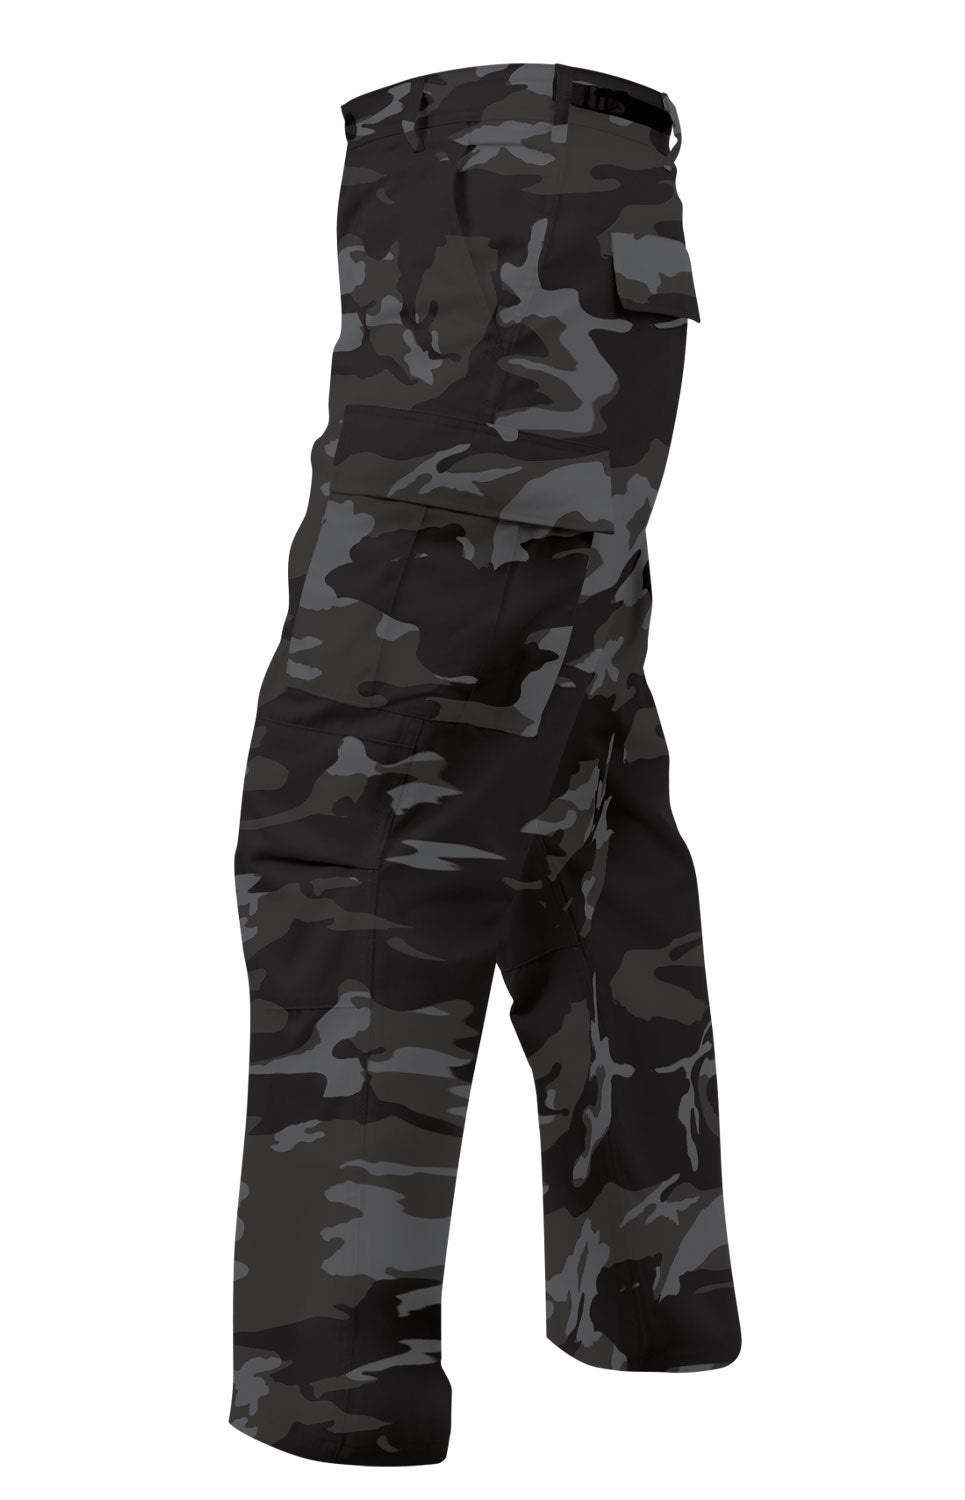 Buy Midnight Blue Digital Camo BDU Pants at Army Surplus World